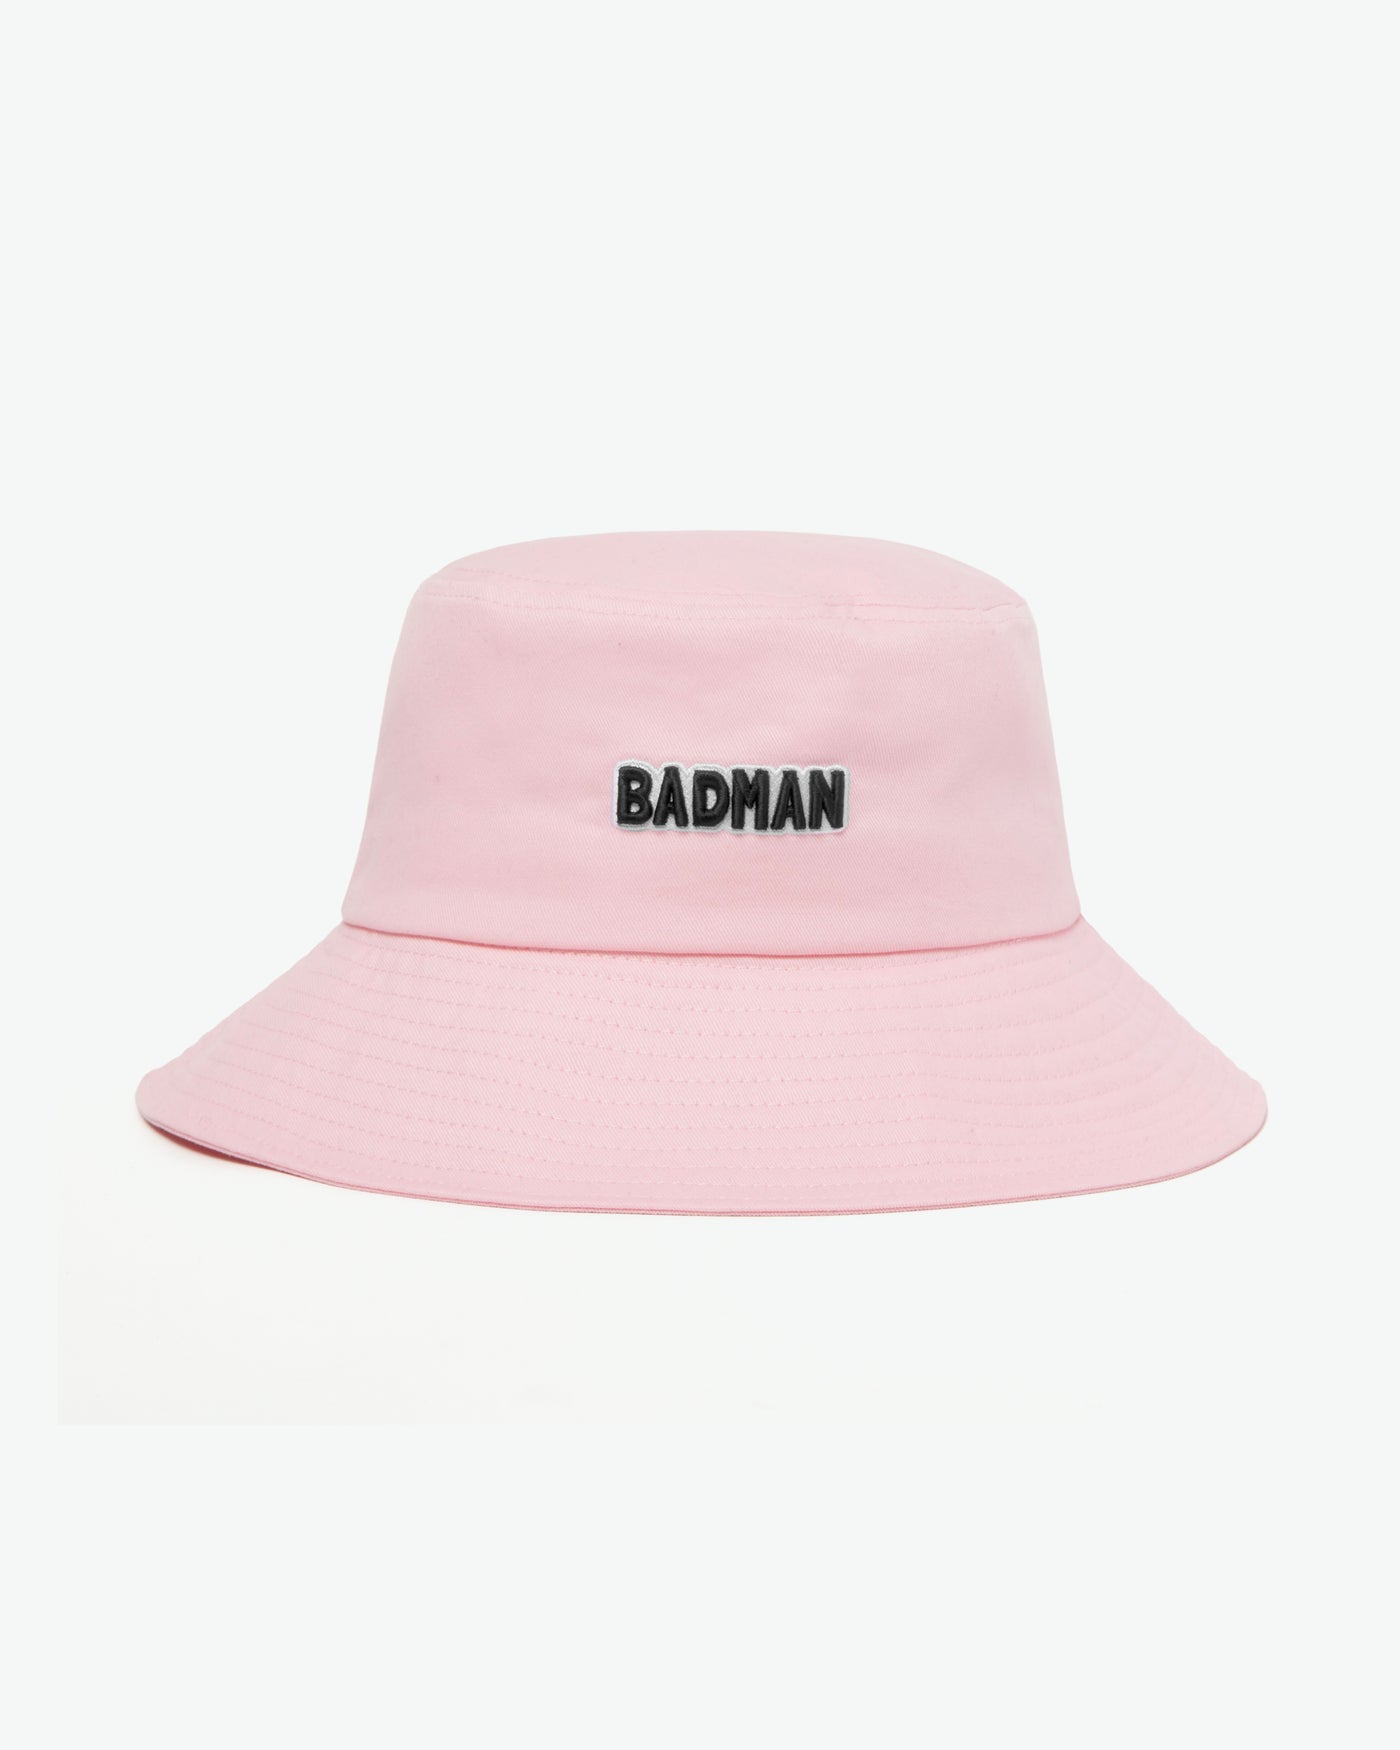 BADMAN Bucket Hat / Vacation Pink